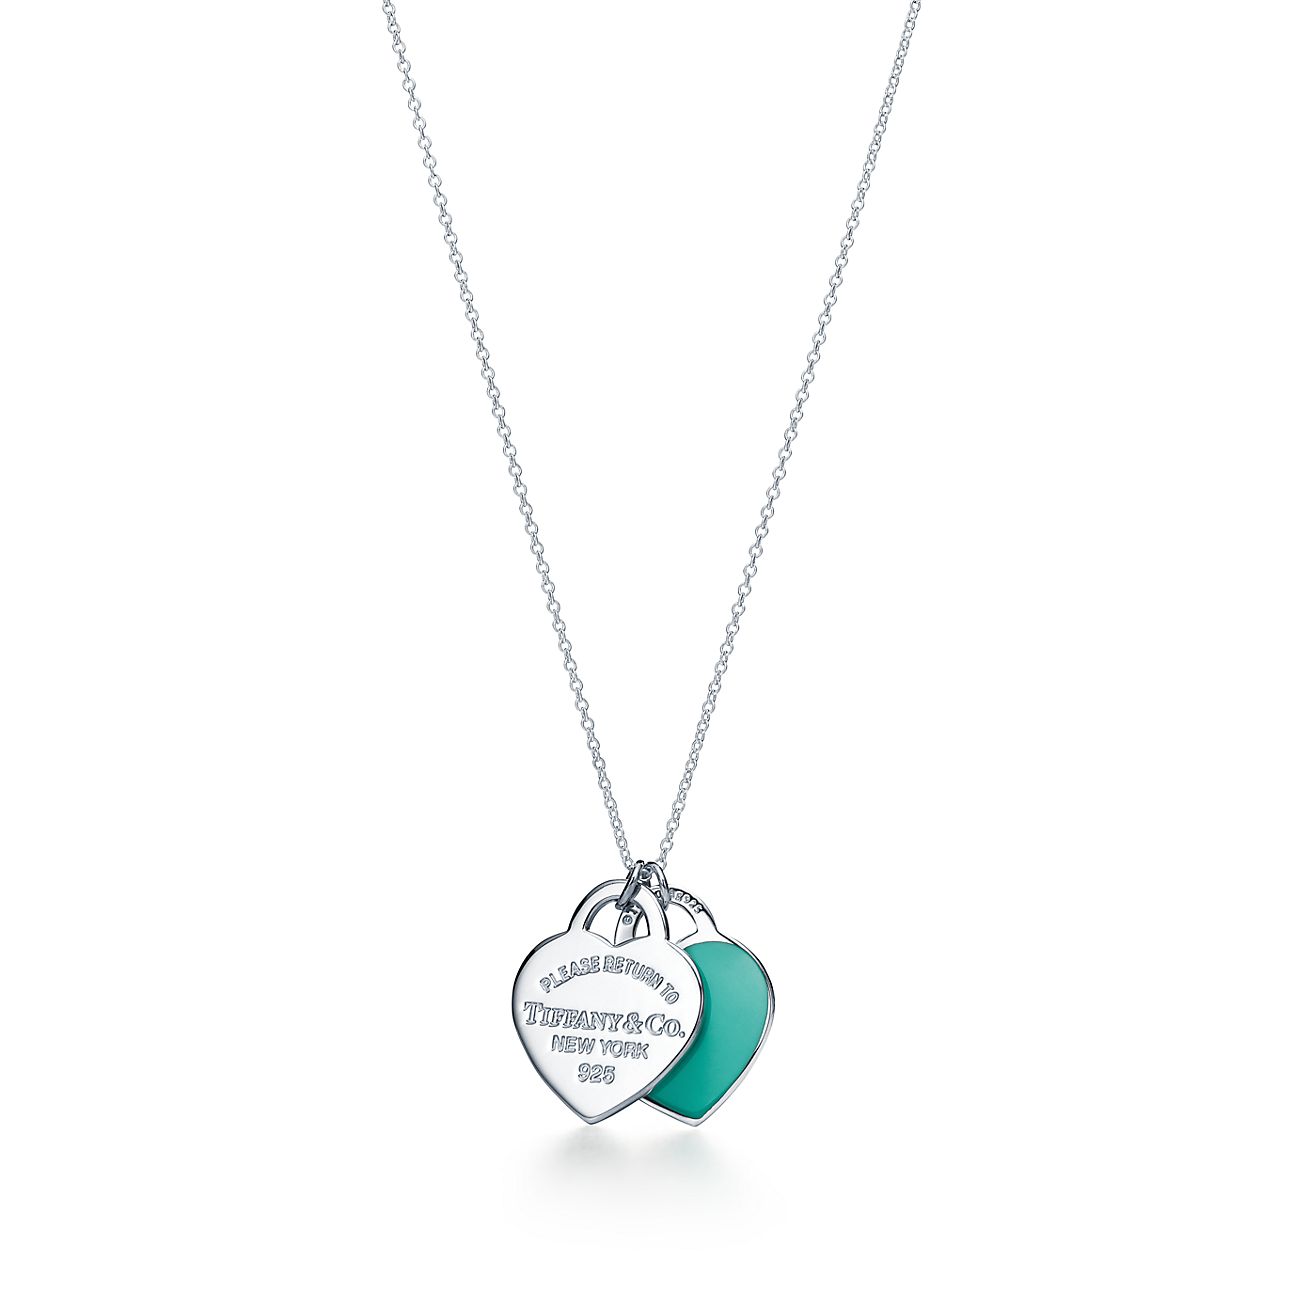 Turquoise heart pendant Blue heart necklace Unique gifts Love statement necklace